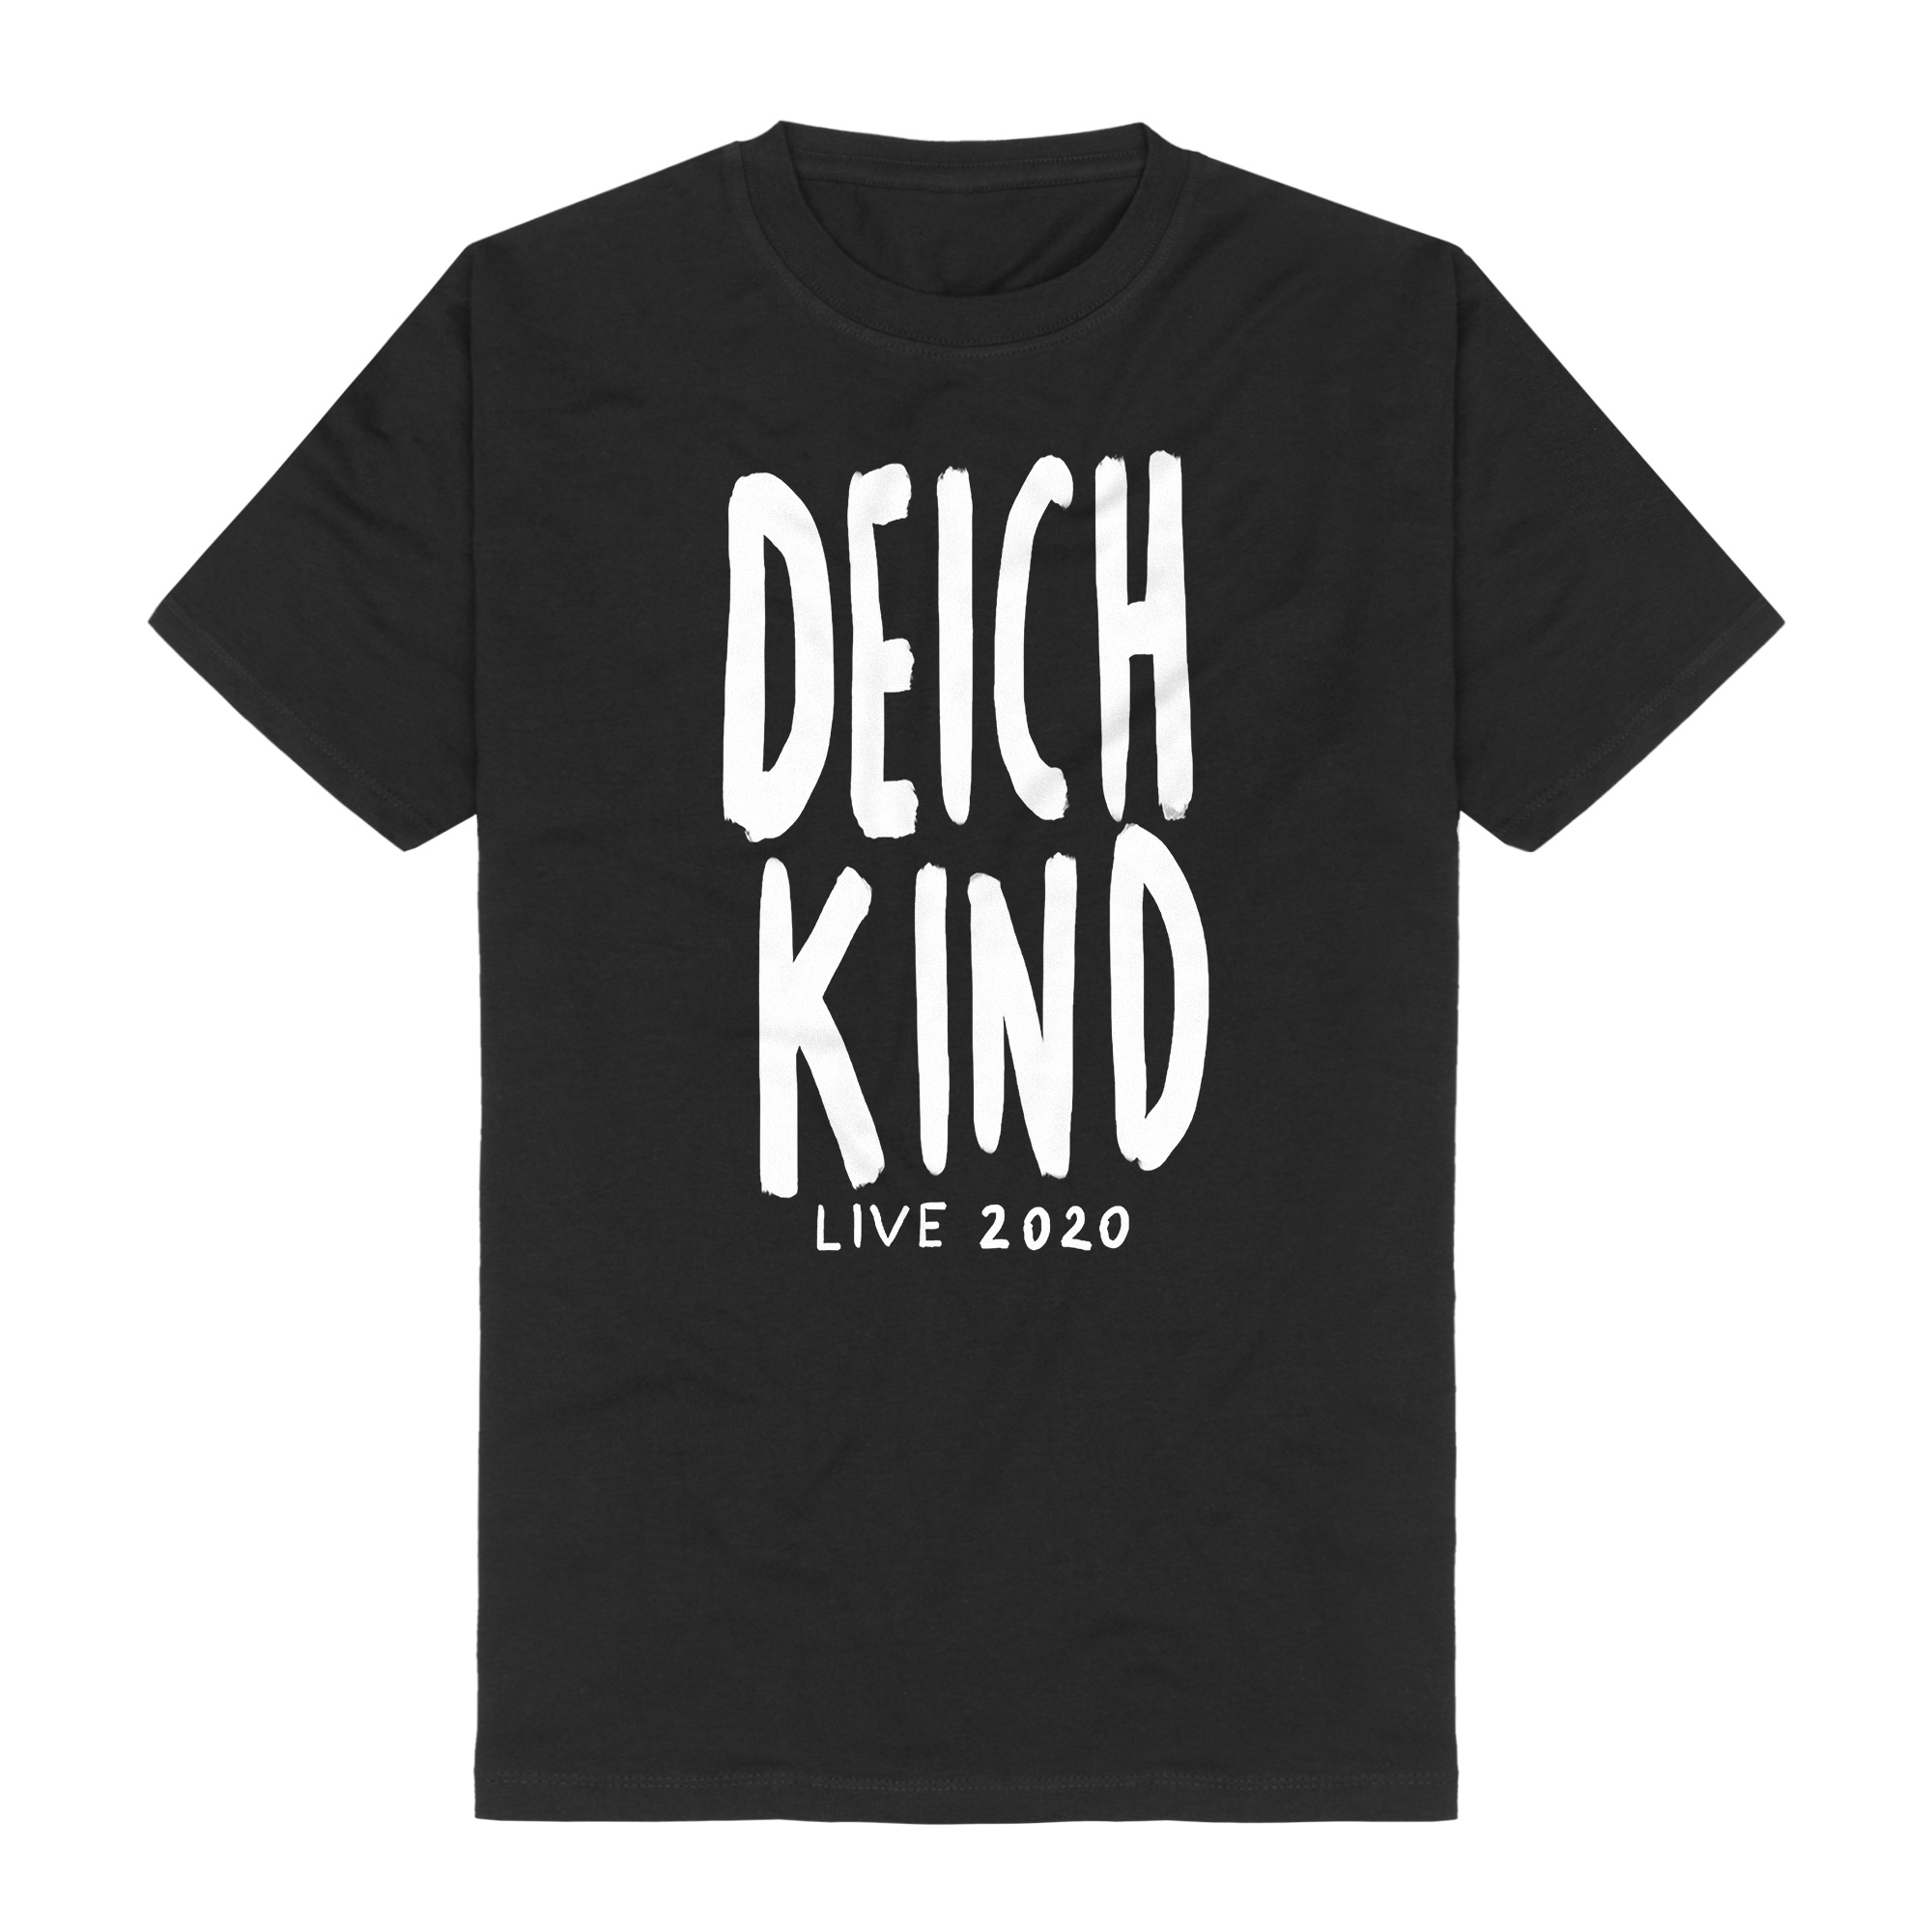 deichkind tour shirt